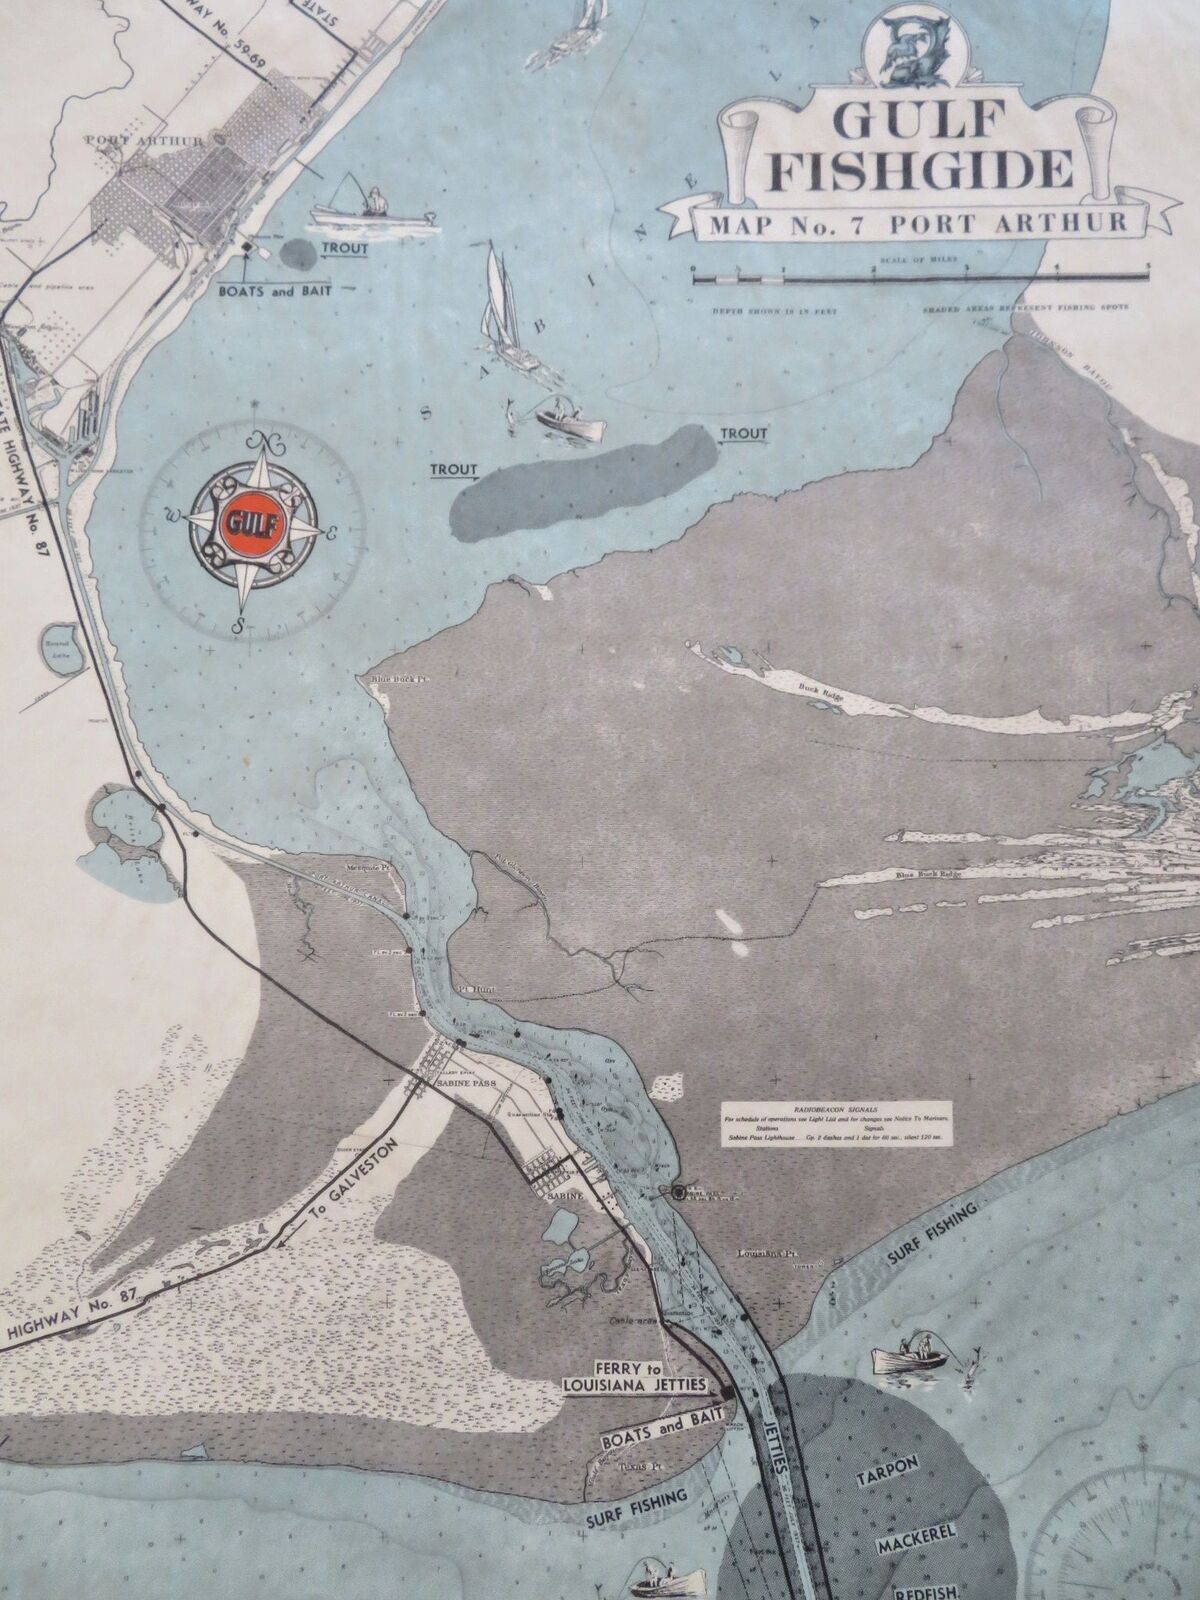 Port Arthur Texas Gulf of Mexico Mackerel Trout 1940's U.S. cartoon fishing map